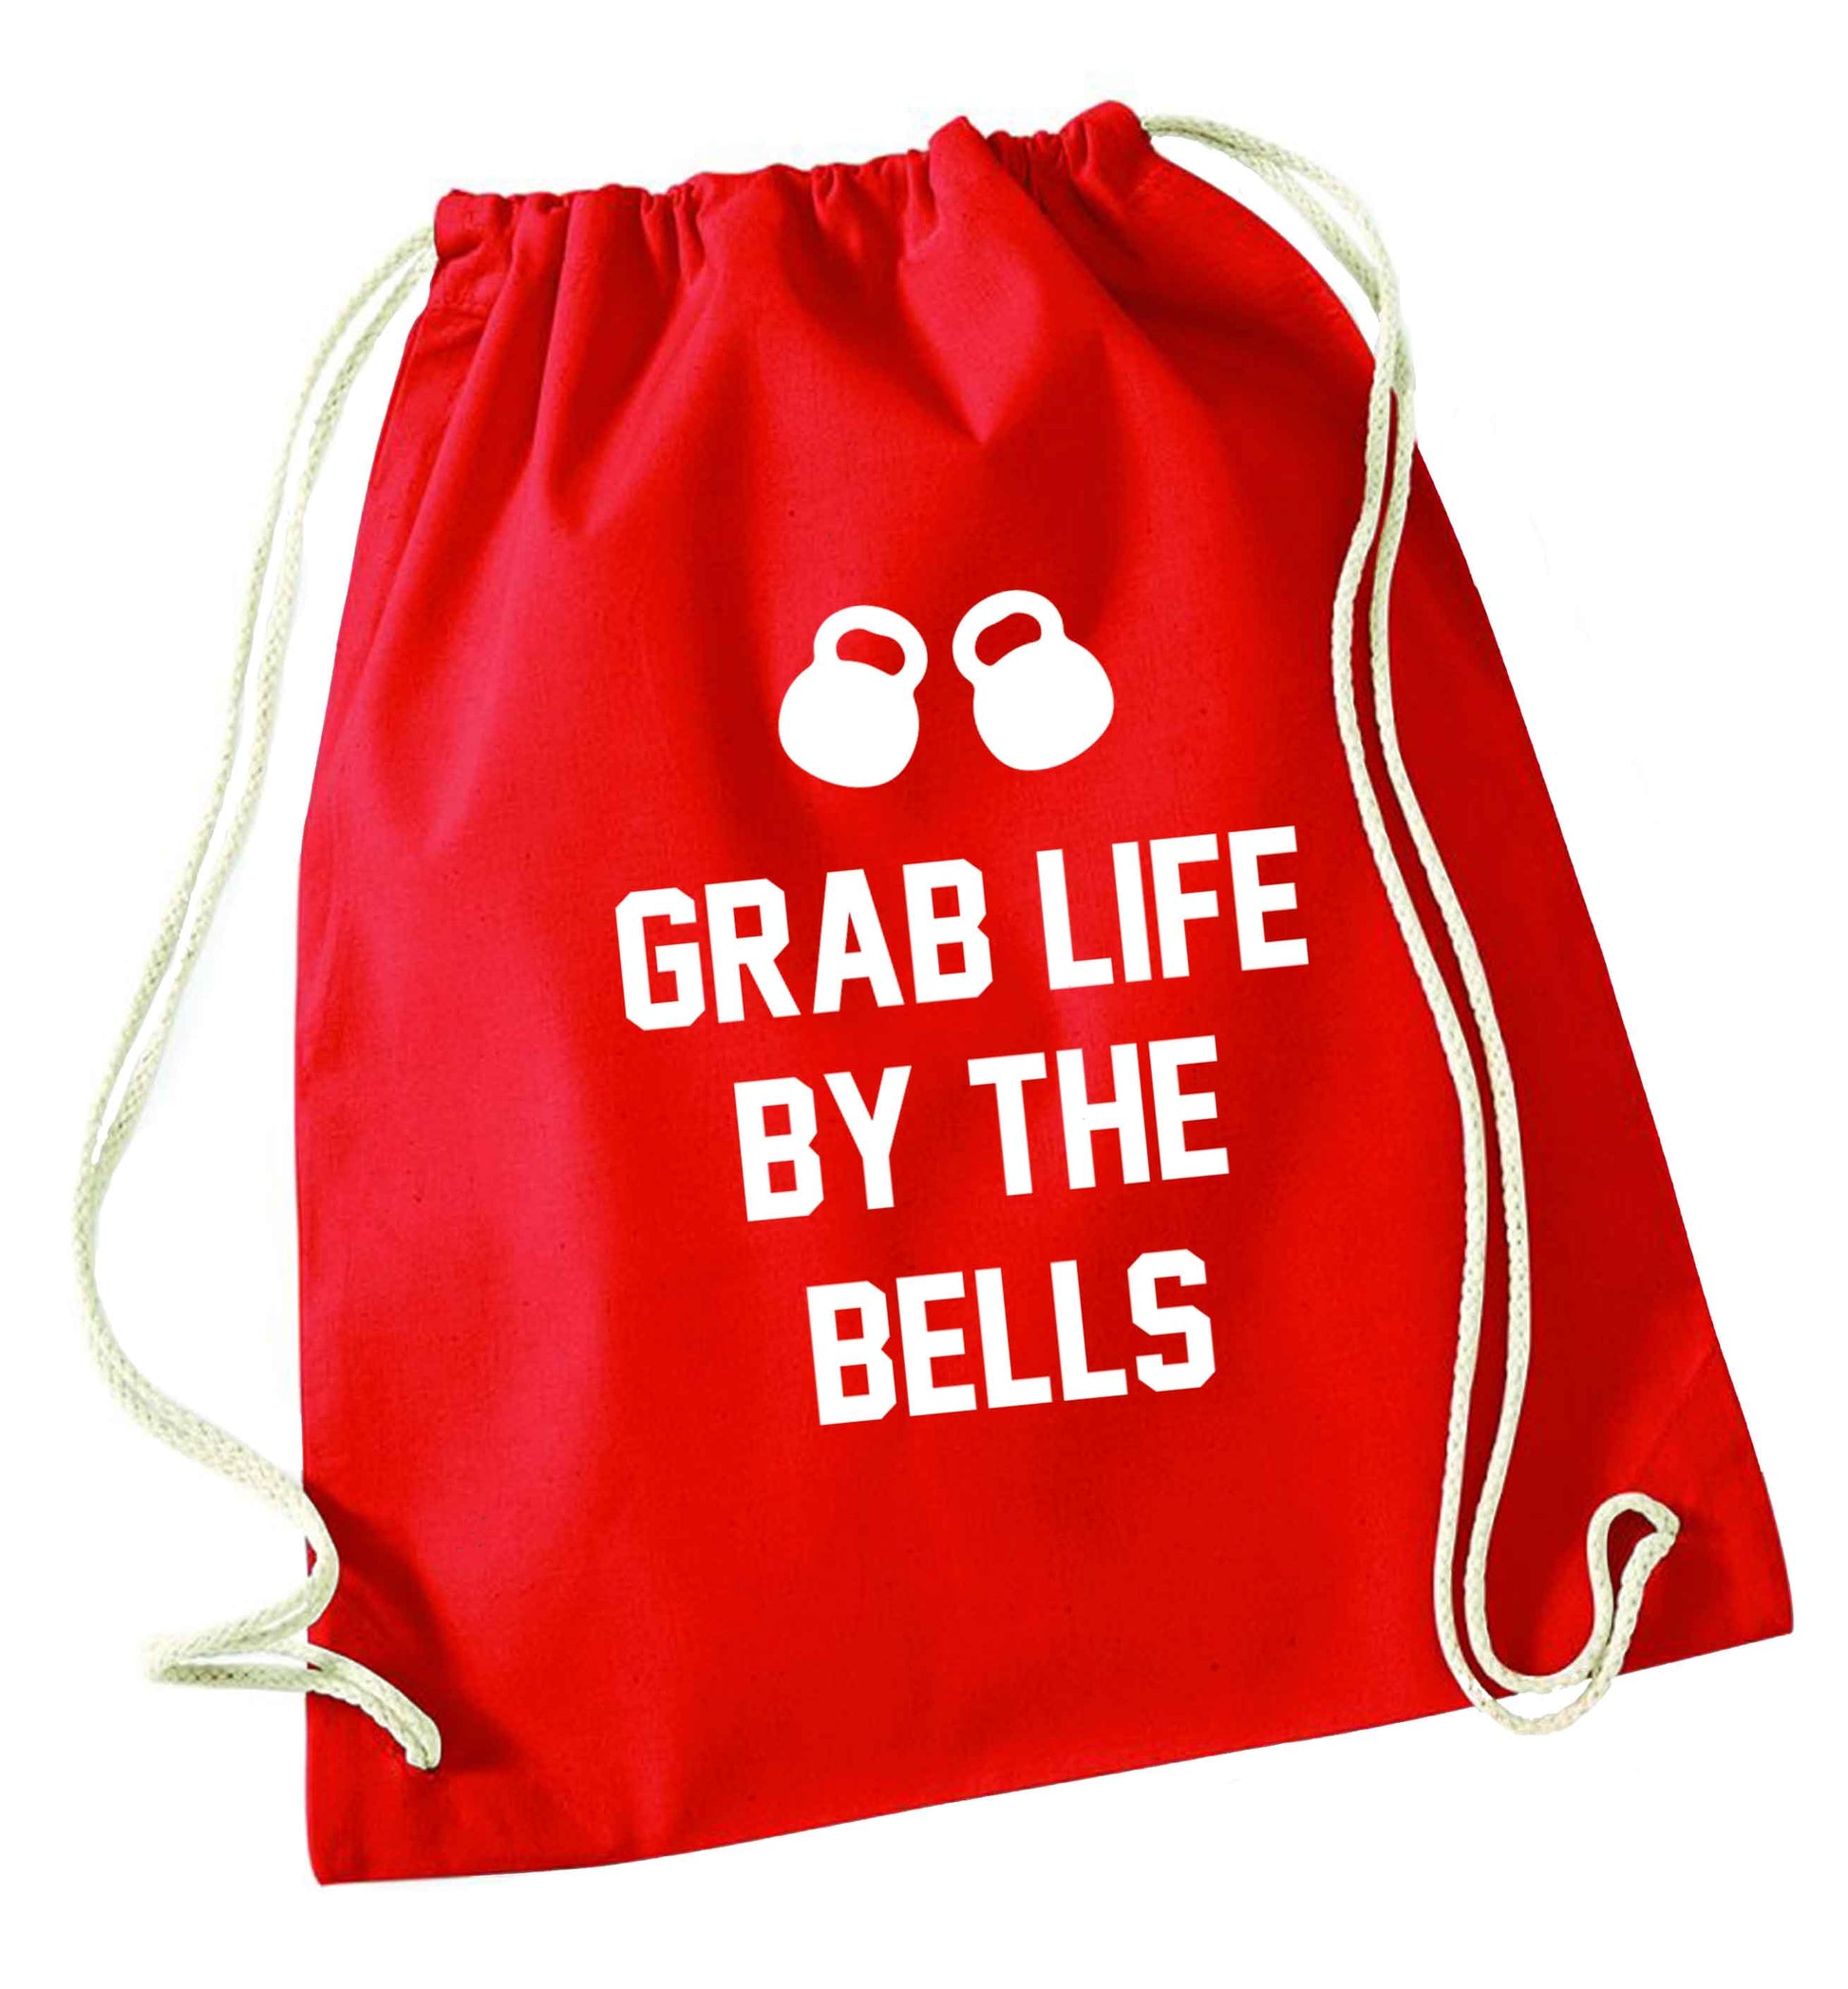 Grab life by the bells red drawstring bag 